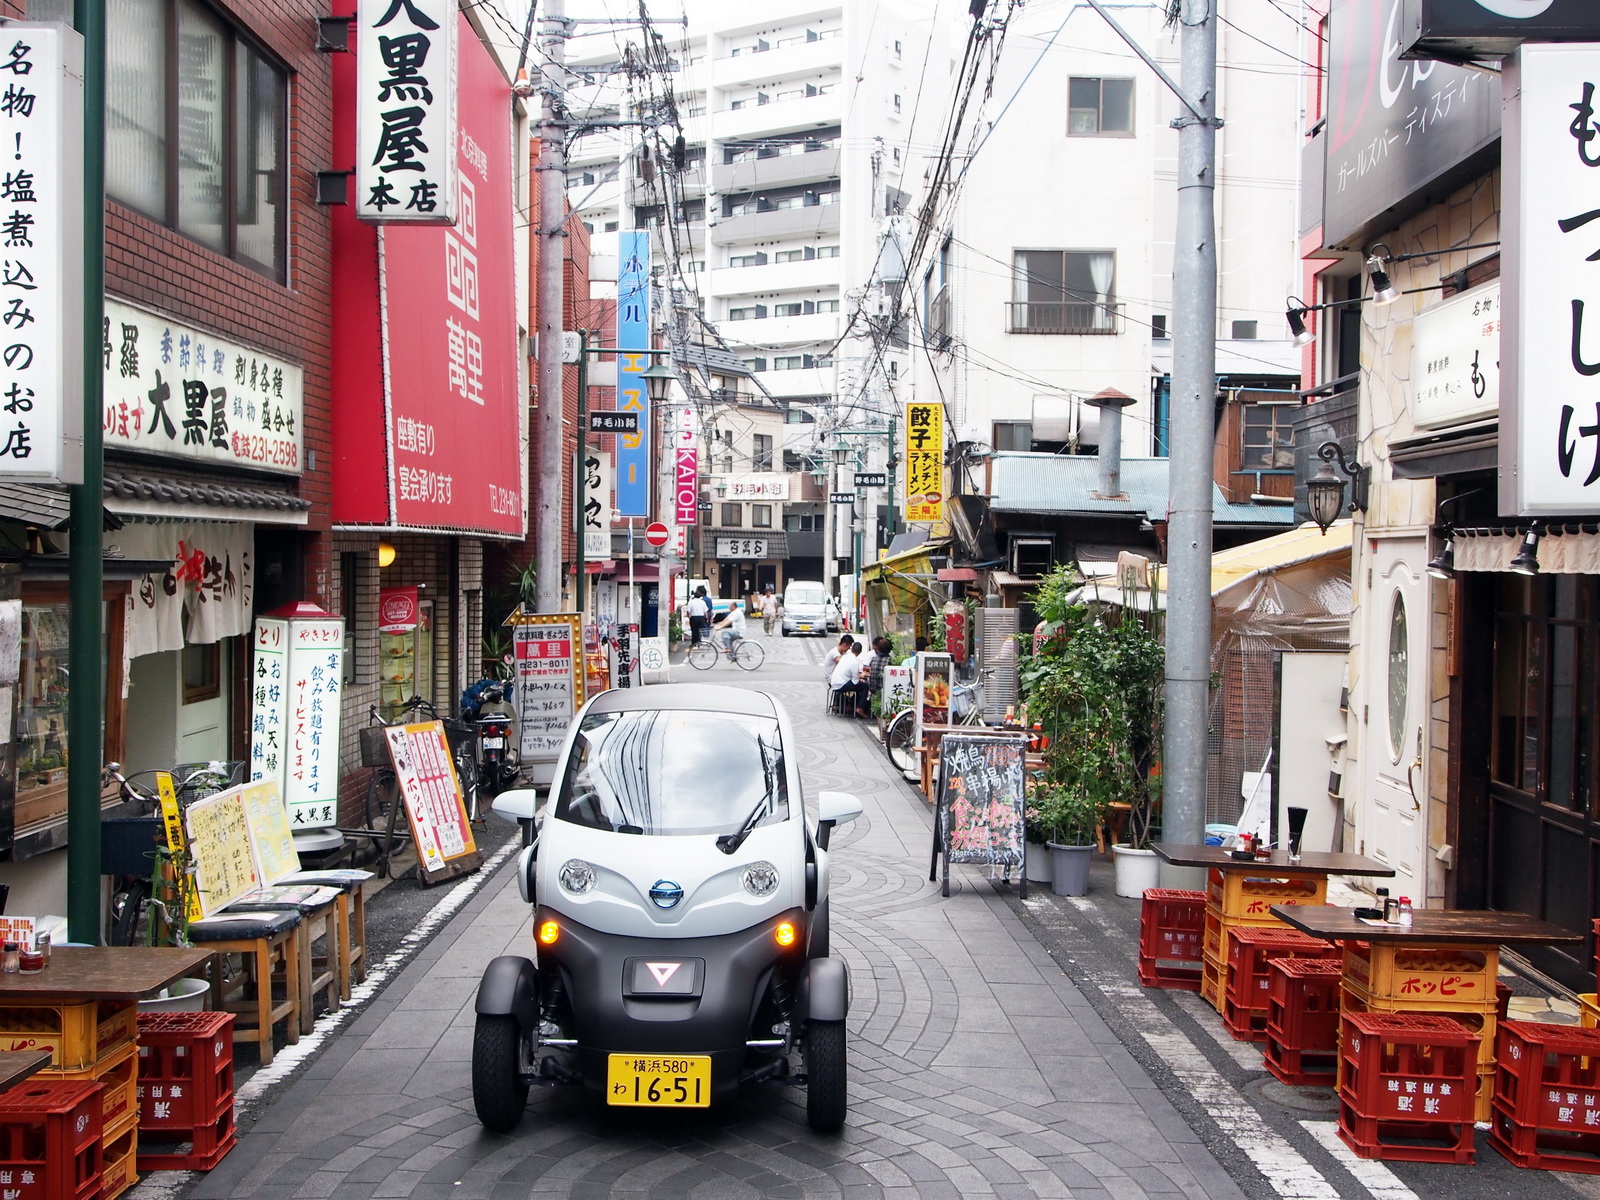 Berita, nissan-new-mobility-concept-car-sharing-yokohama-japan-2: Electric Car Sharing Service Akhirnya Muncul di Jepang